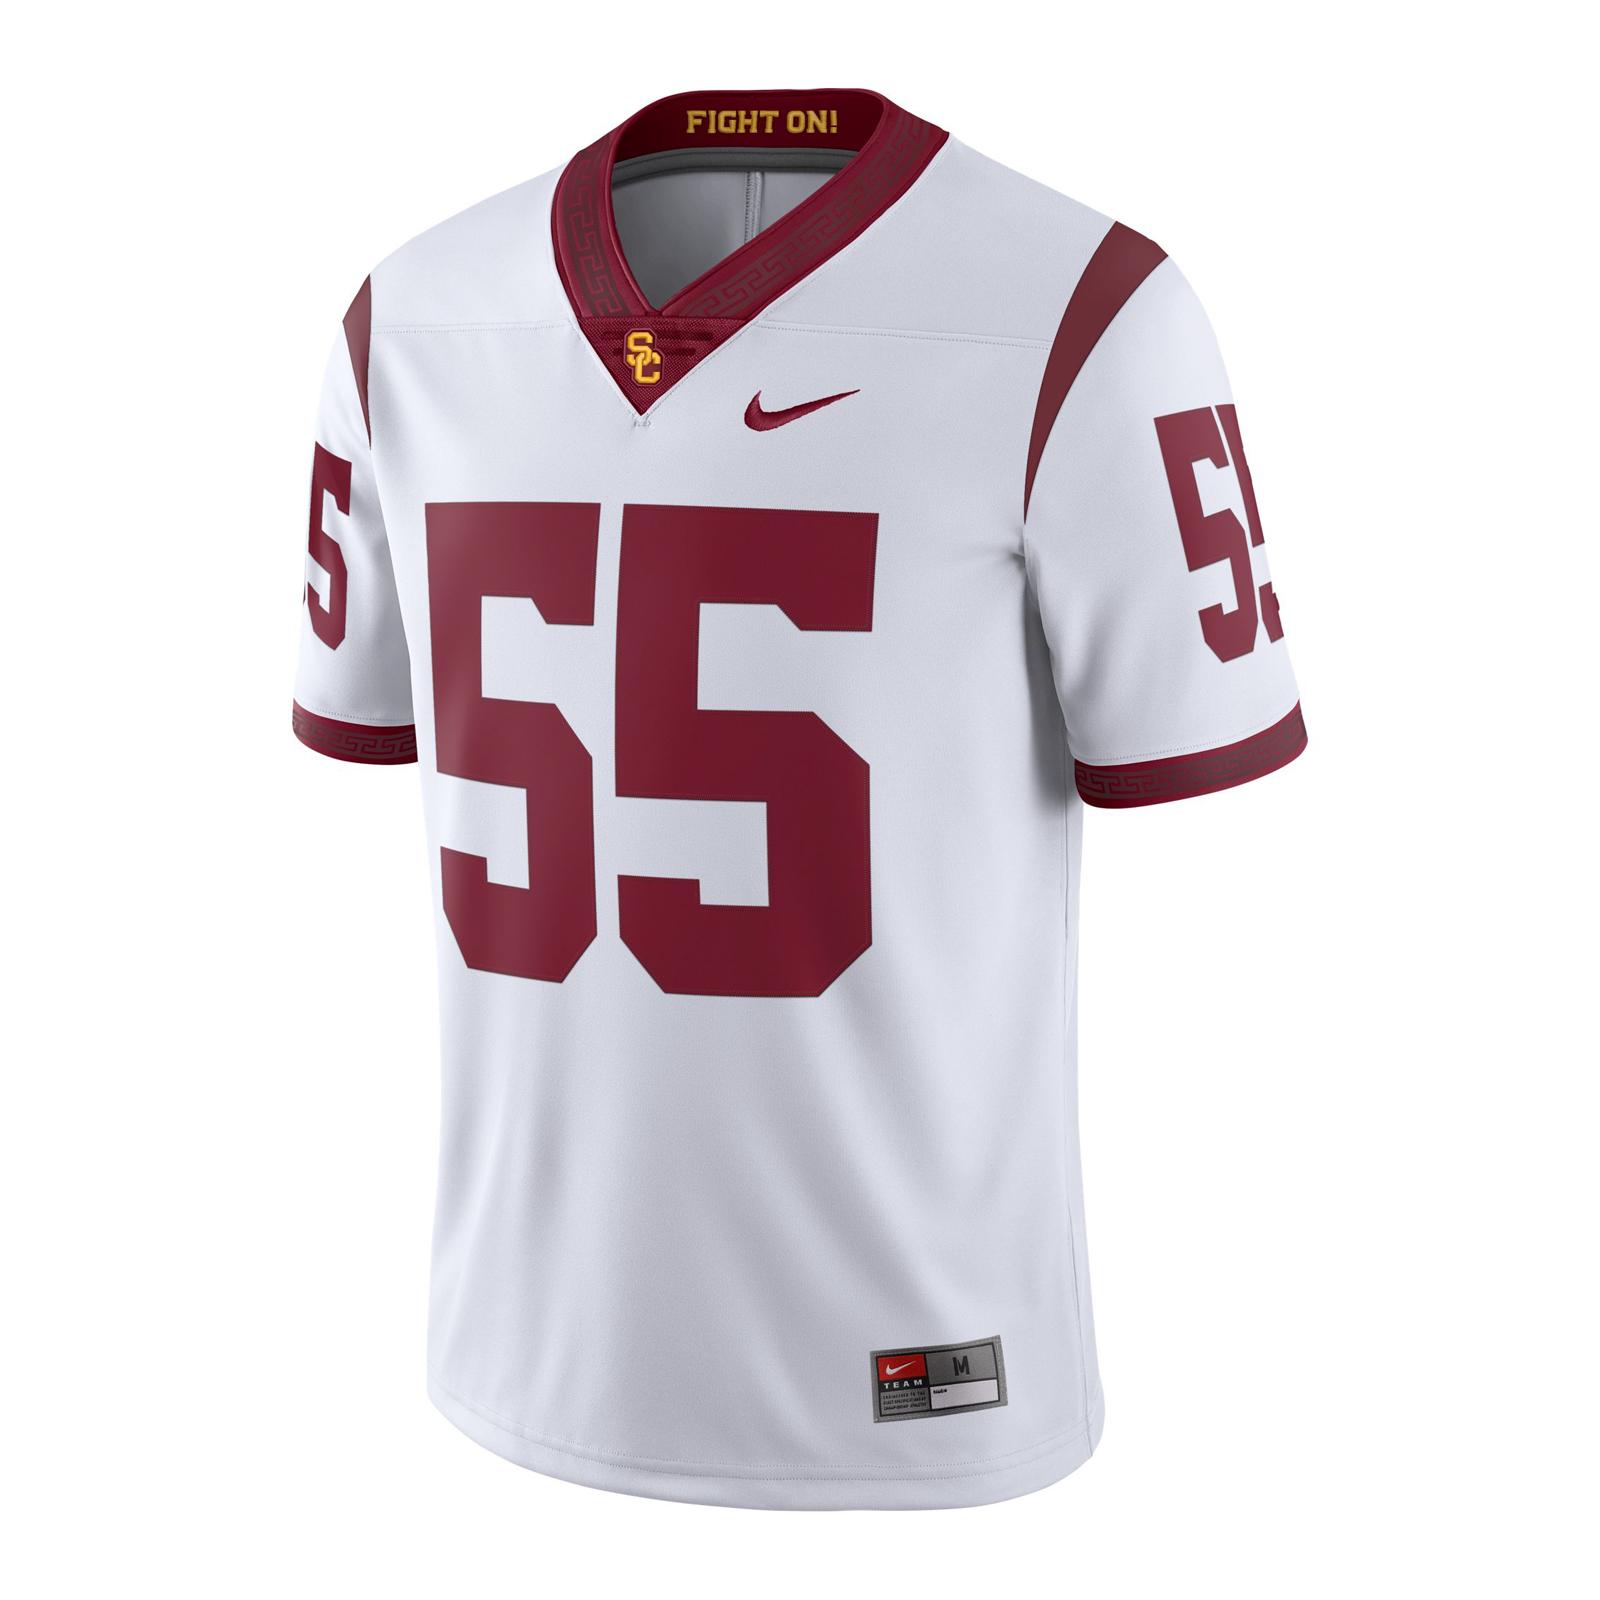 USC Trojans Nike White Road Limited Jersey #55